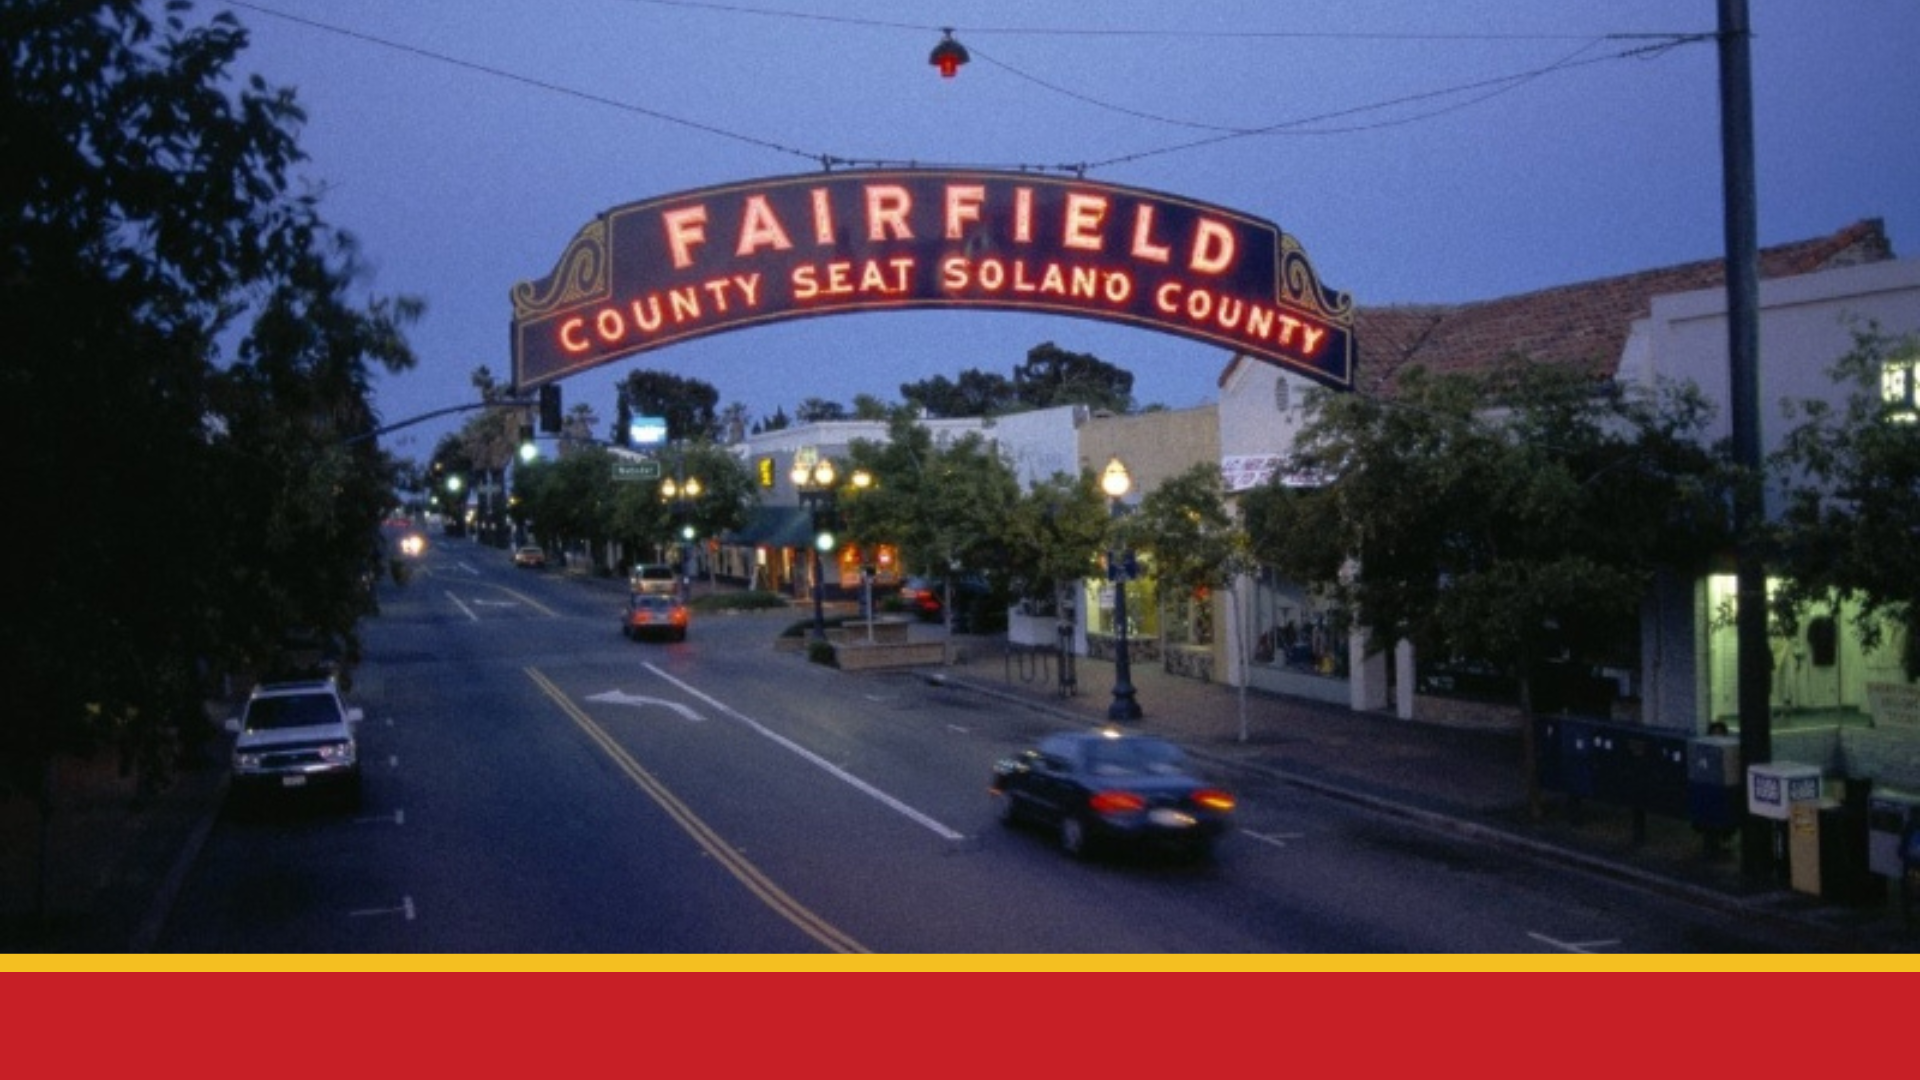 City of Fairfield sign